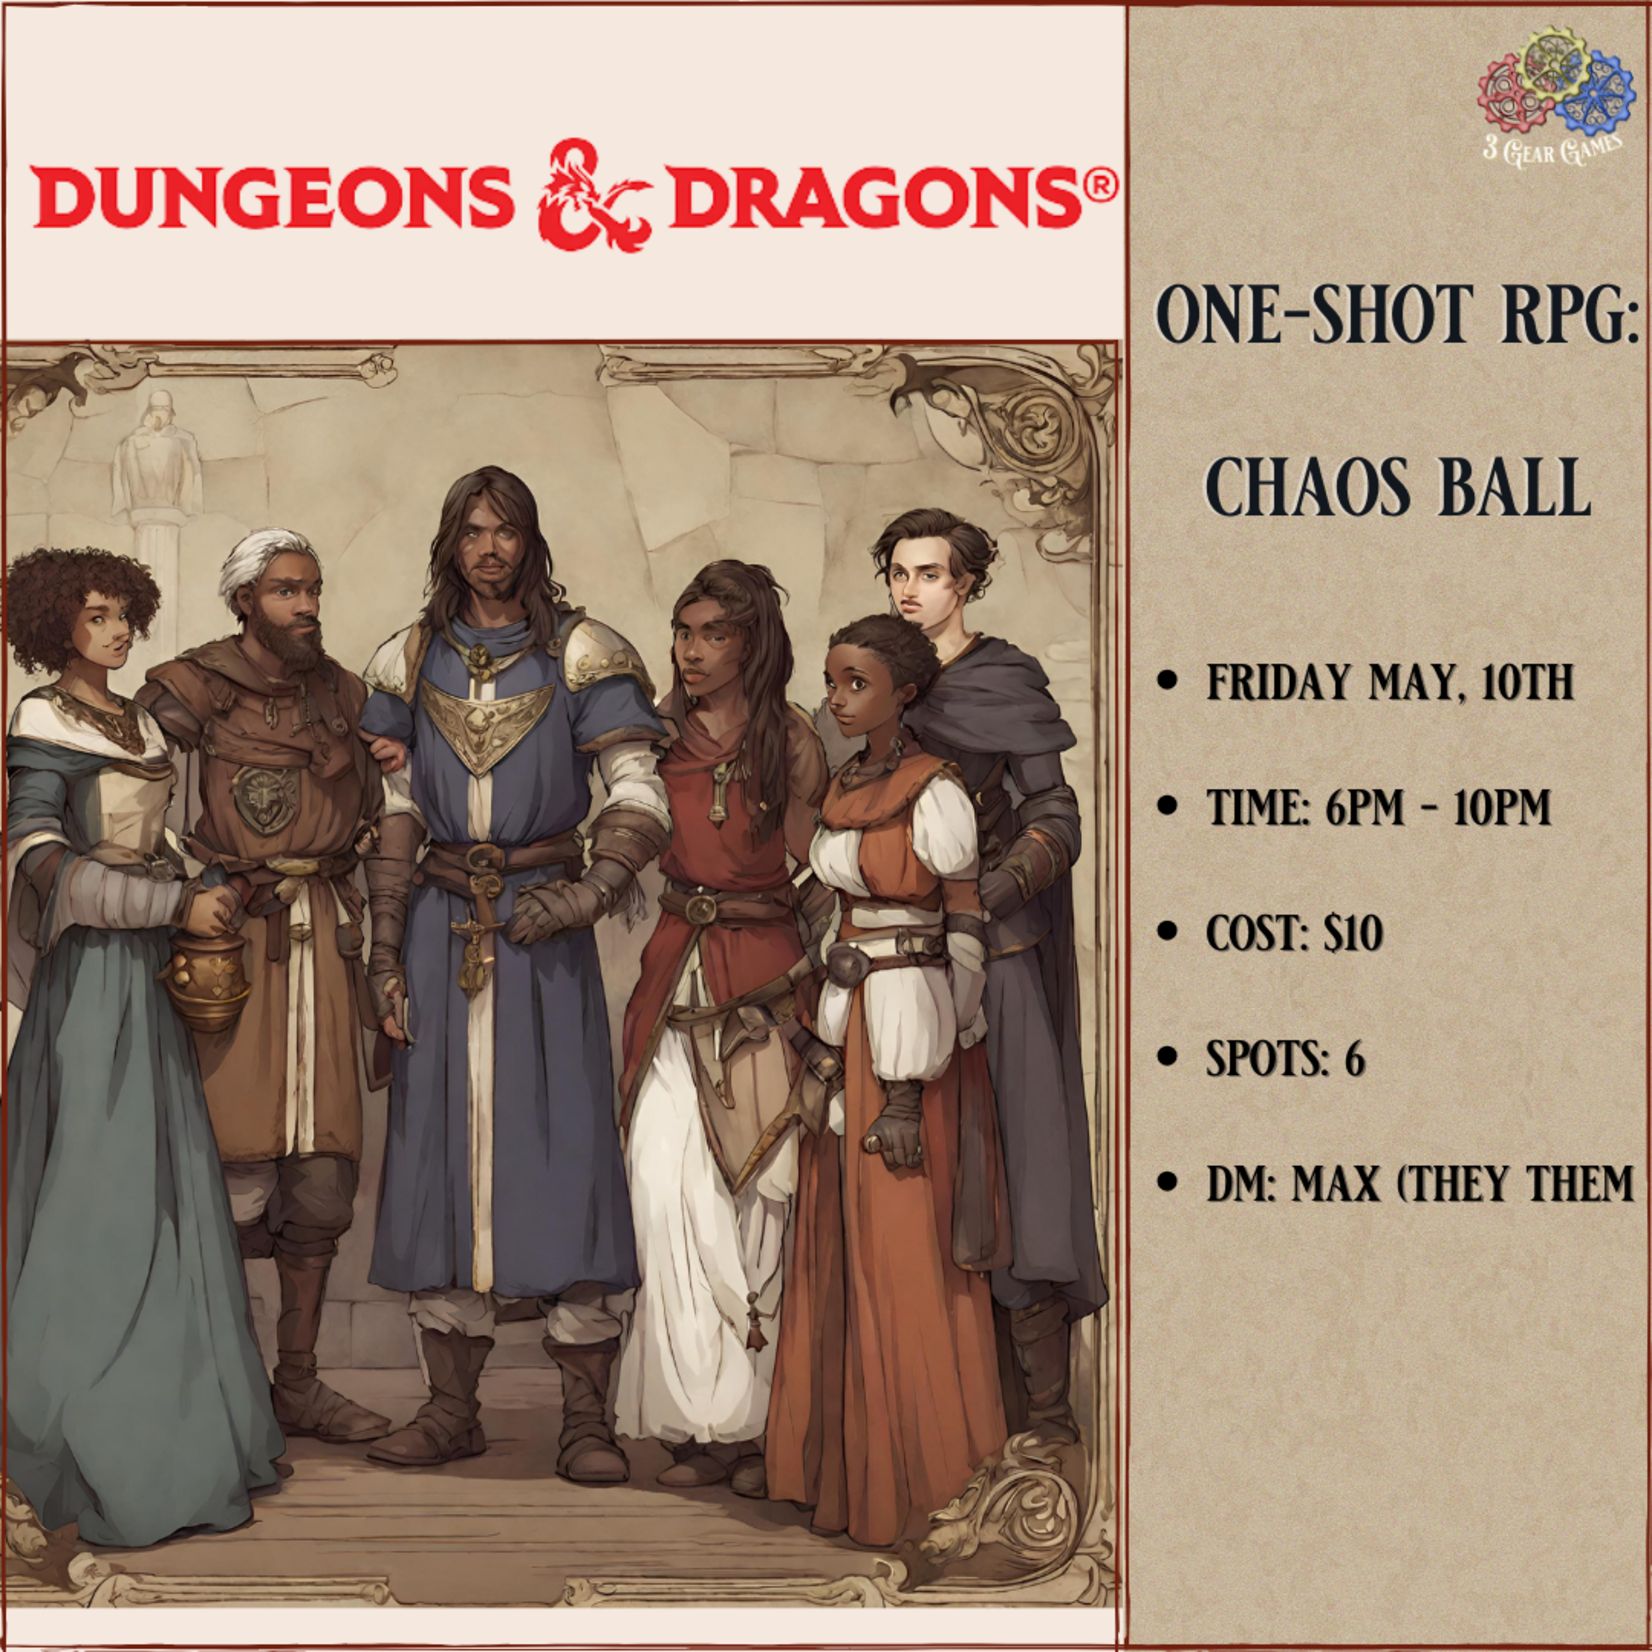 Dungeons & Dragons One-Shot RPG: Chaos Ball